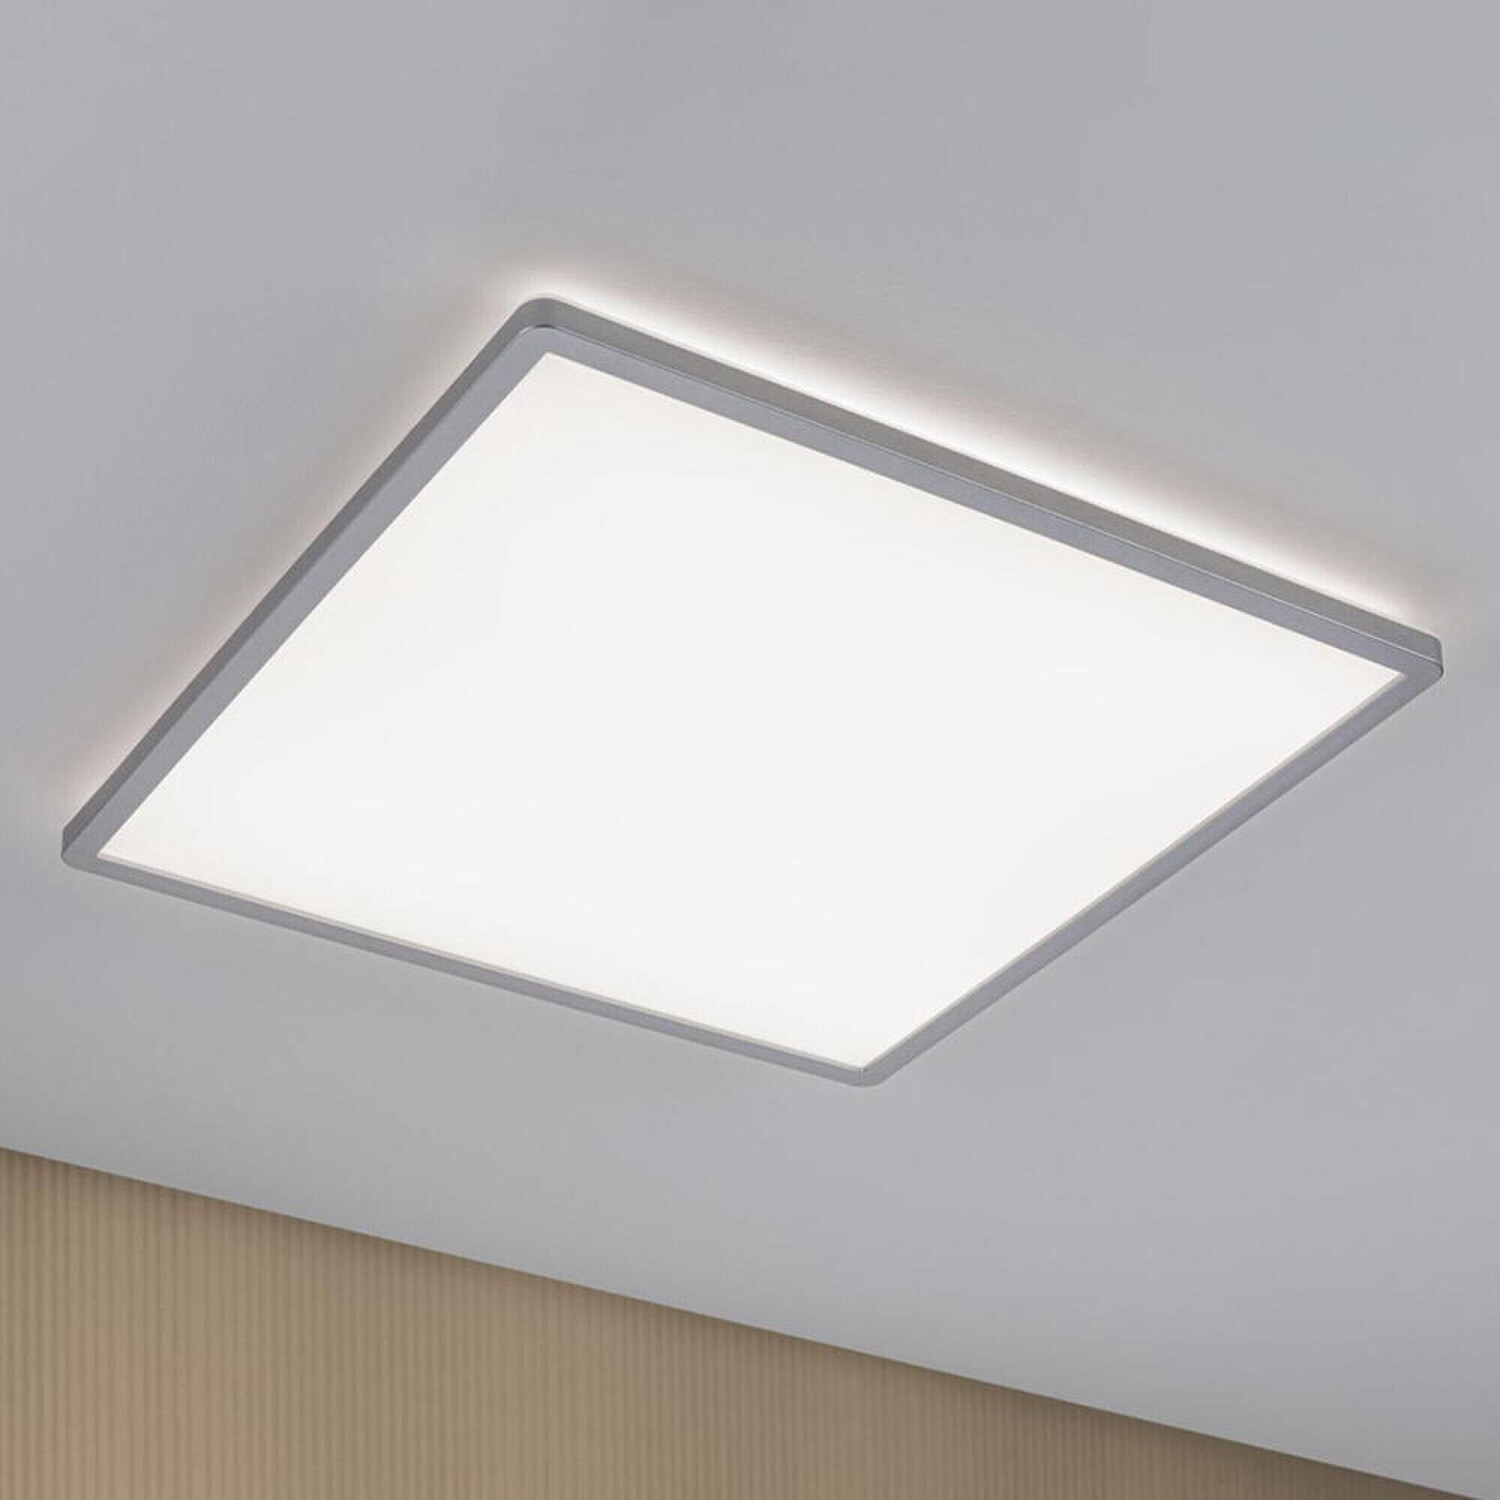 Shine 38,35 bei 4000K quadratisch LED Atria Deckenleuchte (71009) | Preisvergleich Paulmann ab € 22W/2200lm Chrom-matt